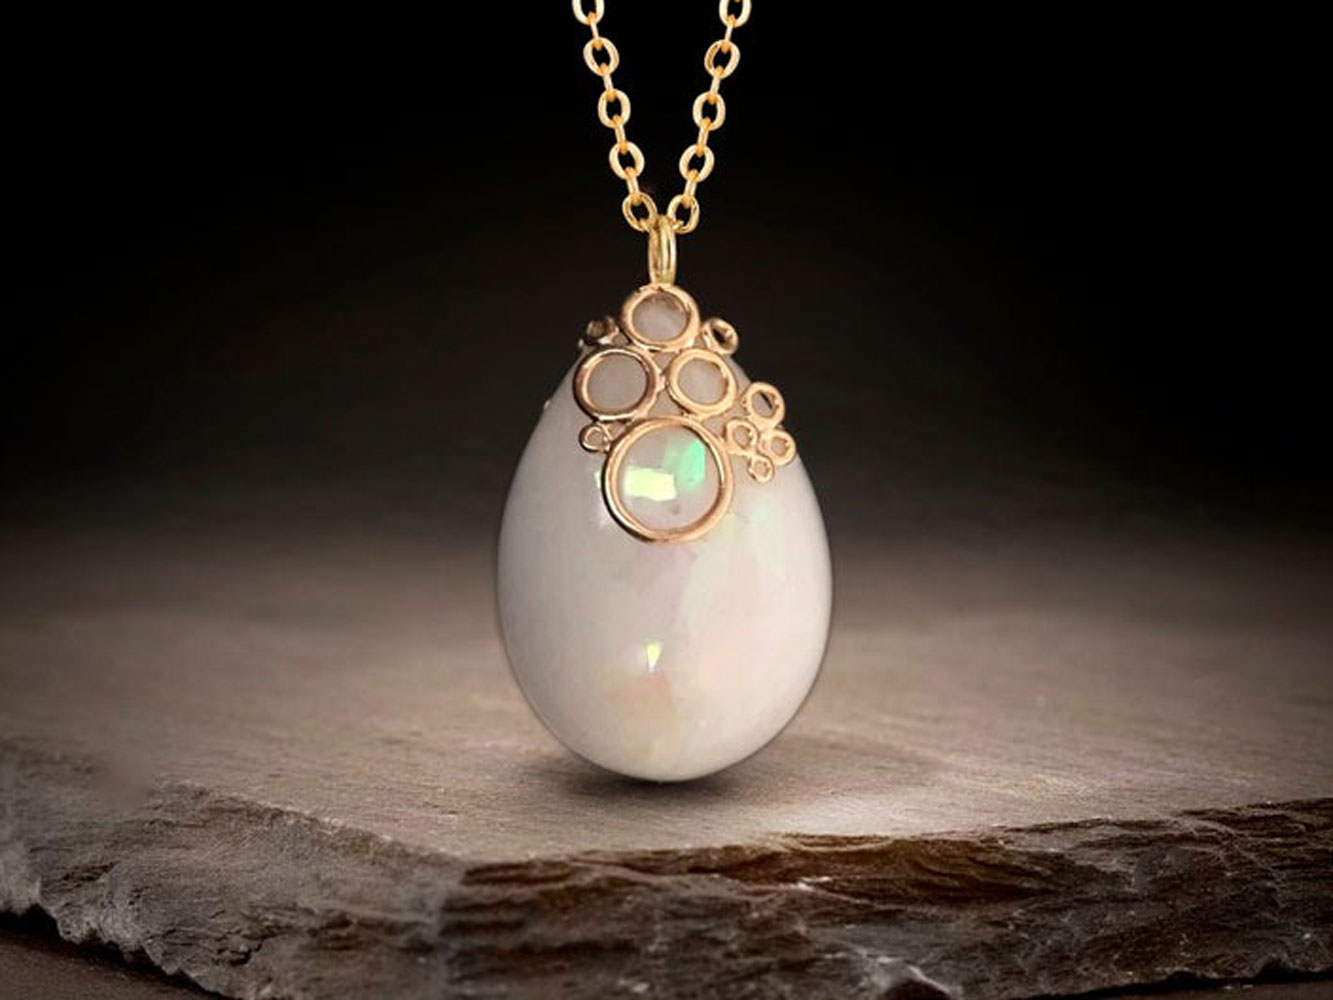 Breastmilk jewelry necklace pendant drop teardrop shape with opal effect flakes and fancy bail from KeepsakeMom yellow gold